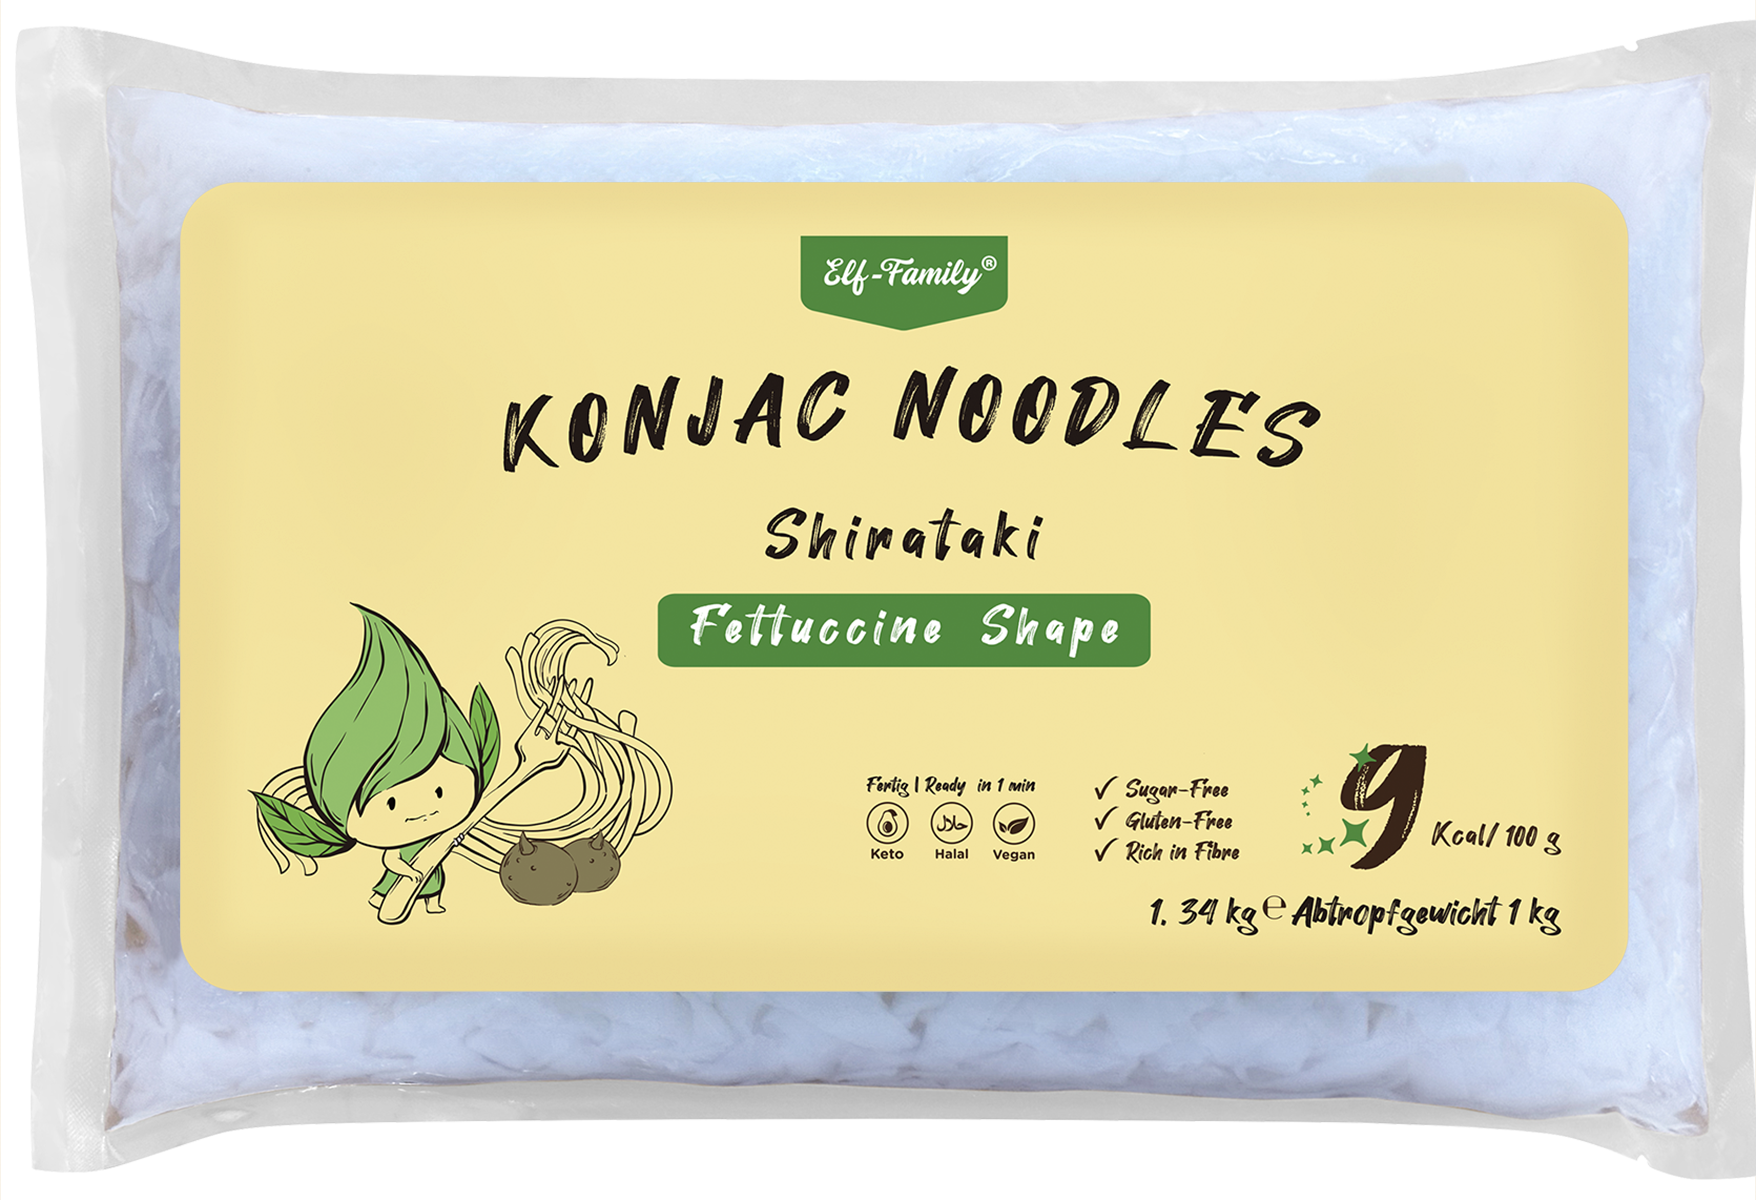 Elf-Family XXXL Gastro Pack 1.34kg Shirataki Noodles for Restaurants - Only 9kcal, Low Carb, Instant, Family Pack Konjac Noodles, Keto, Low Calorie, Vegan, Gluten Free -Fettuccine 